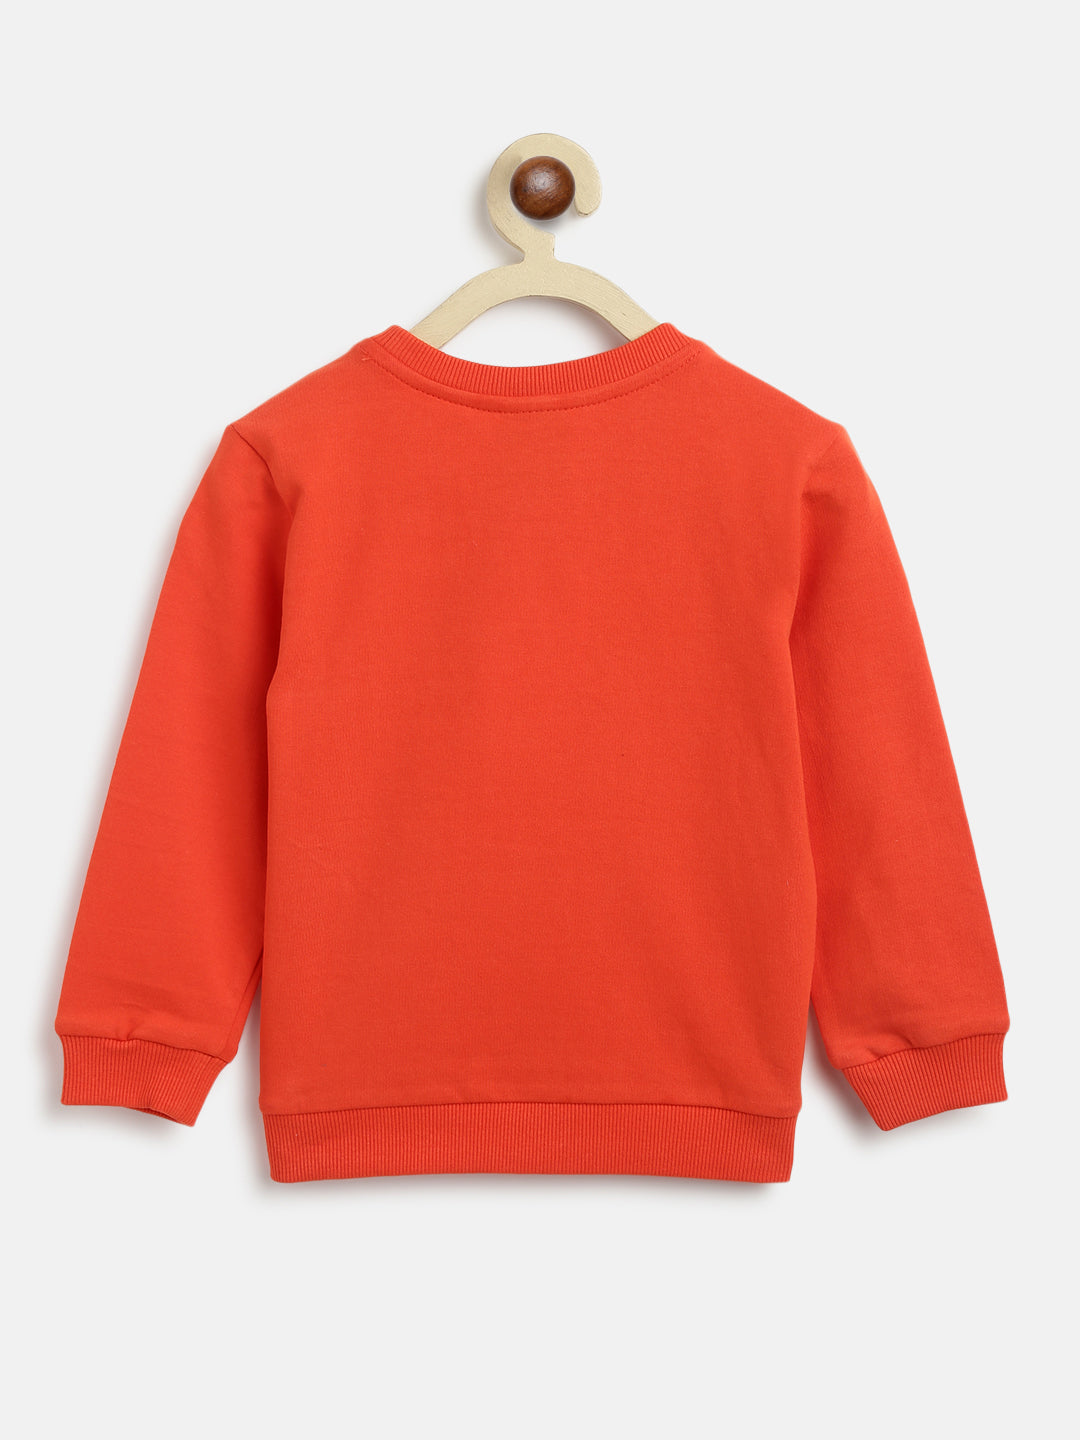 Nautinati Boys Orange Printed Sweatshirt